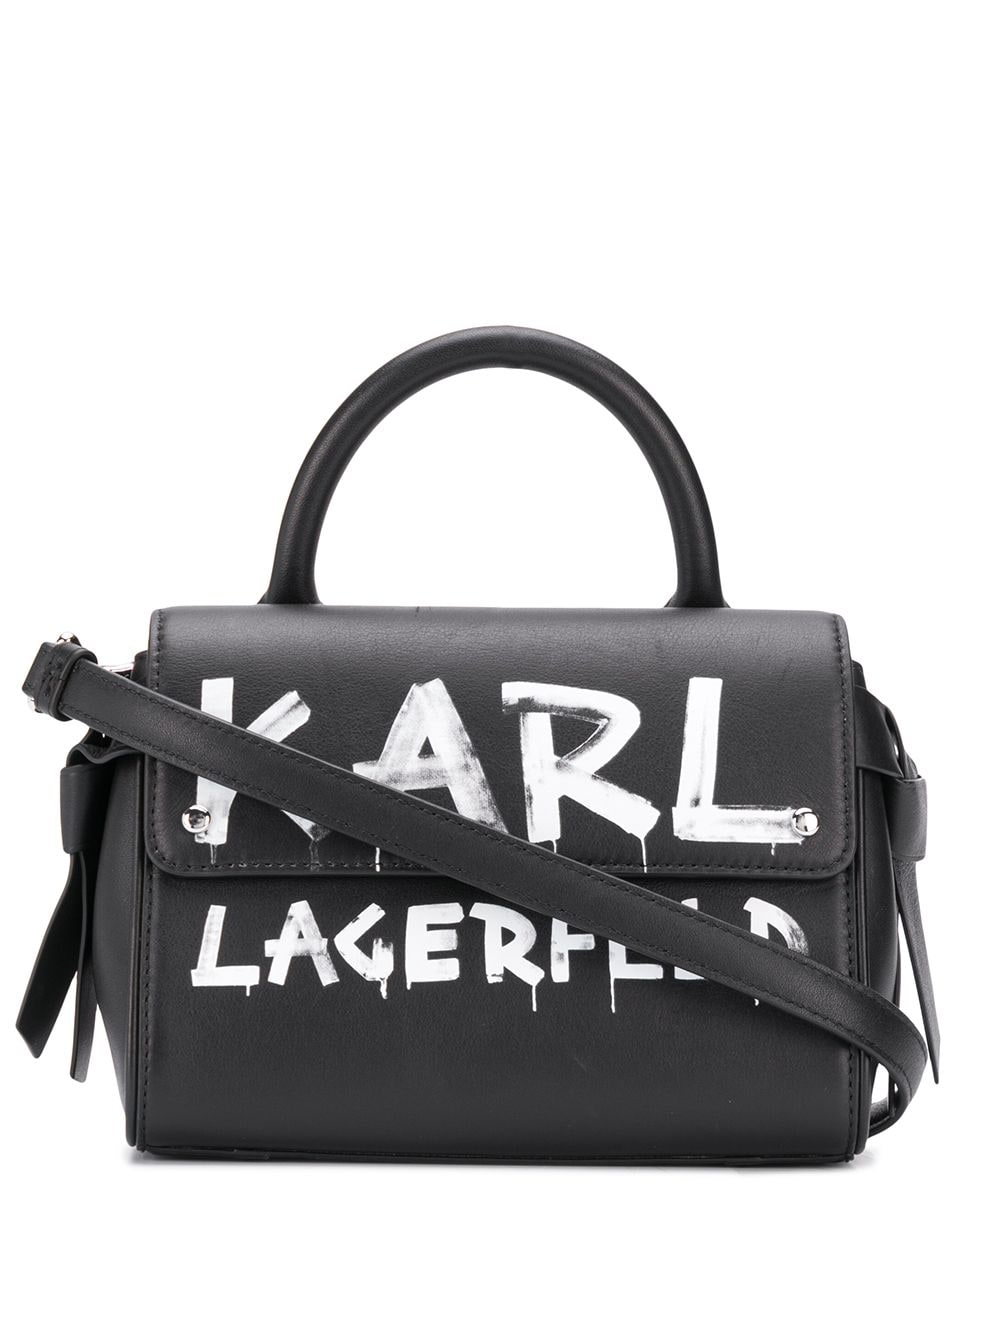 Karl lagerfeld graffiti bag